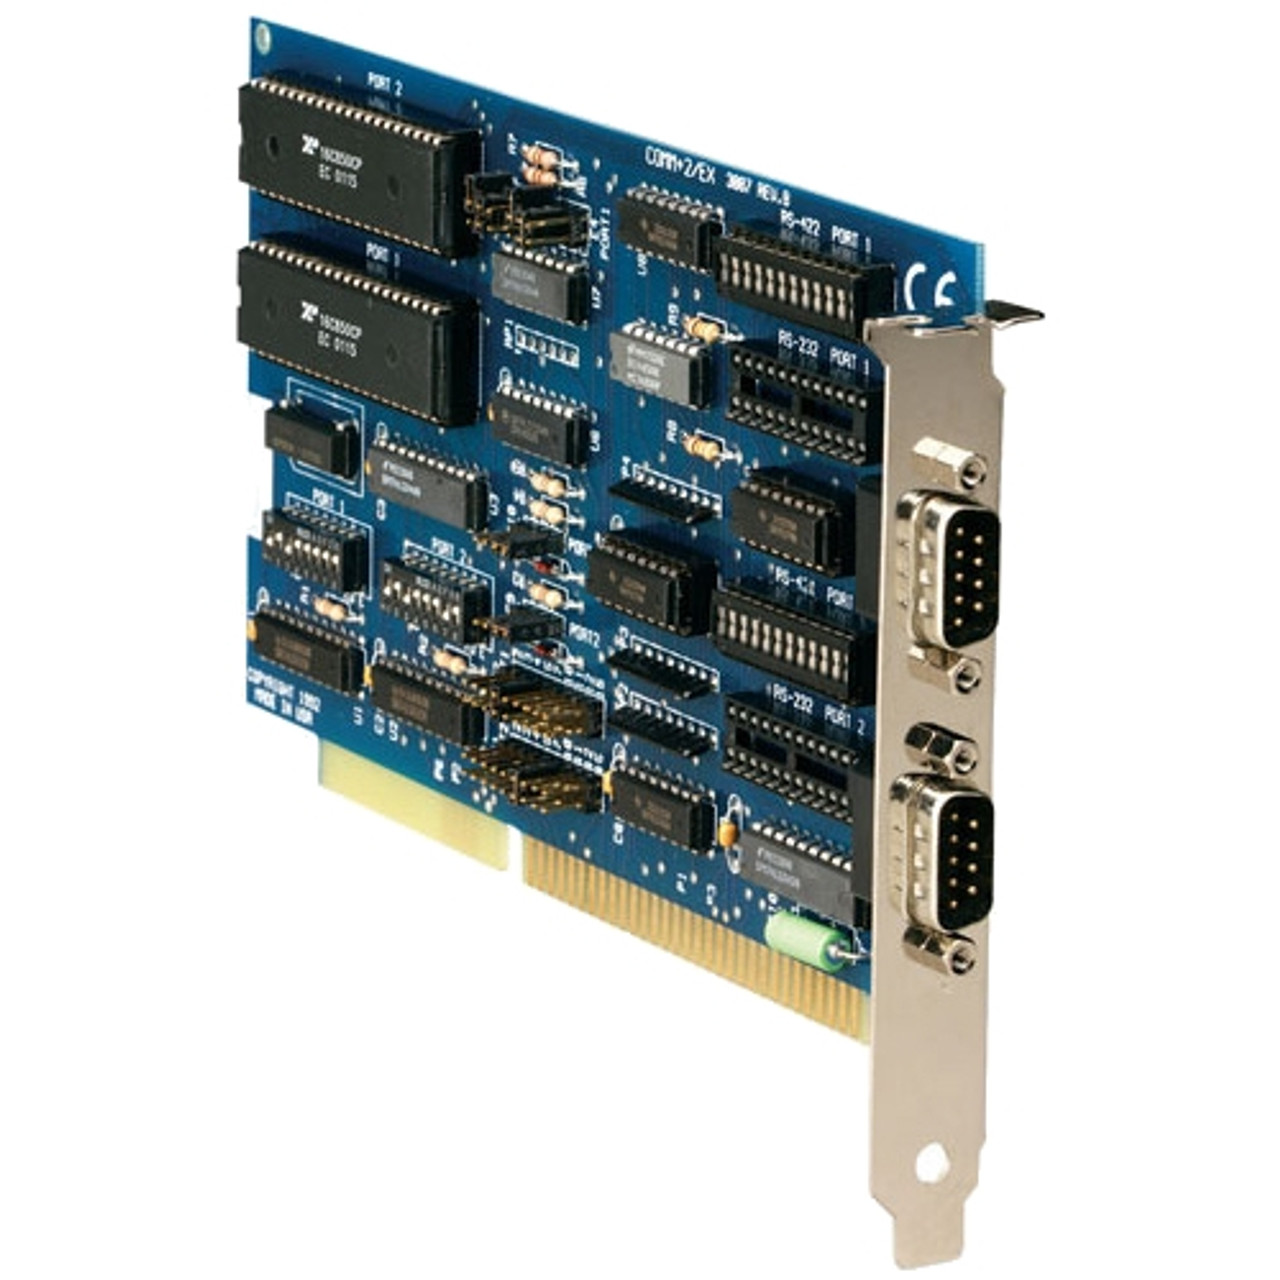 IC113C Black Box NIB-2-Port RS-232/422/485 ISA Card (2- or 4-Wire) 16550 UART